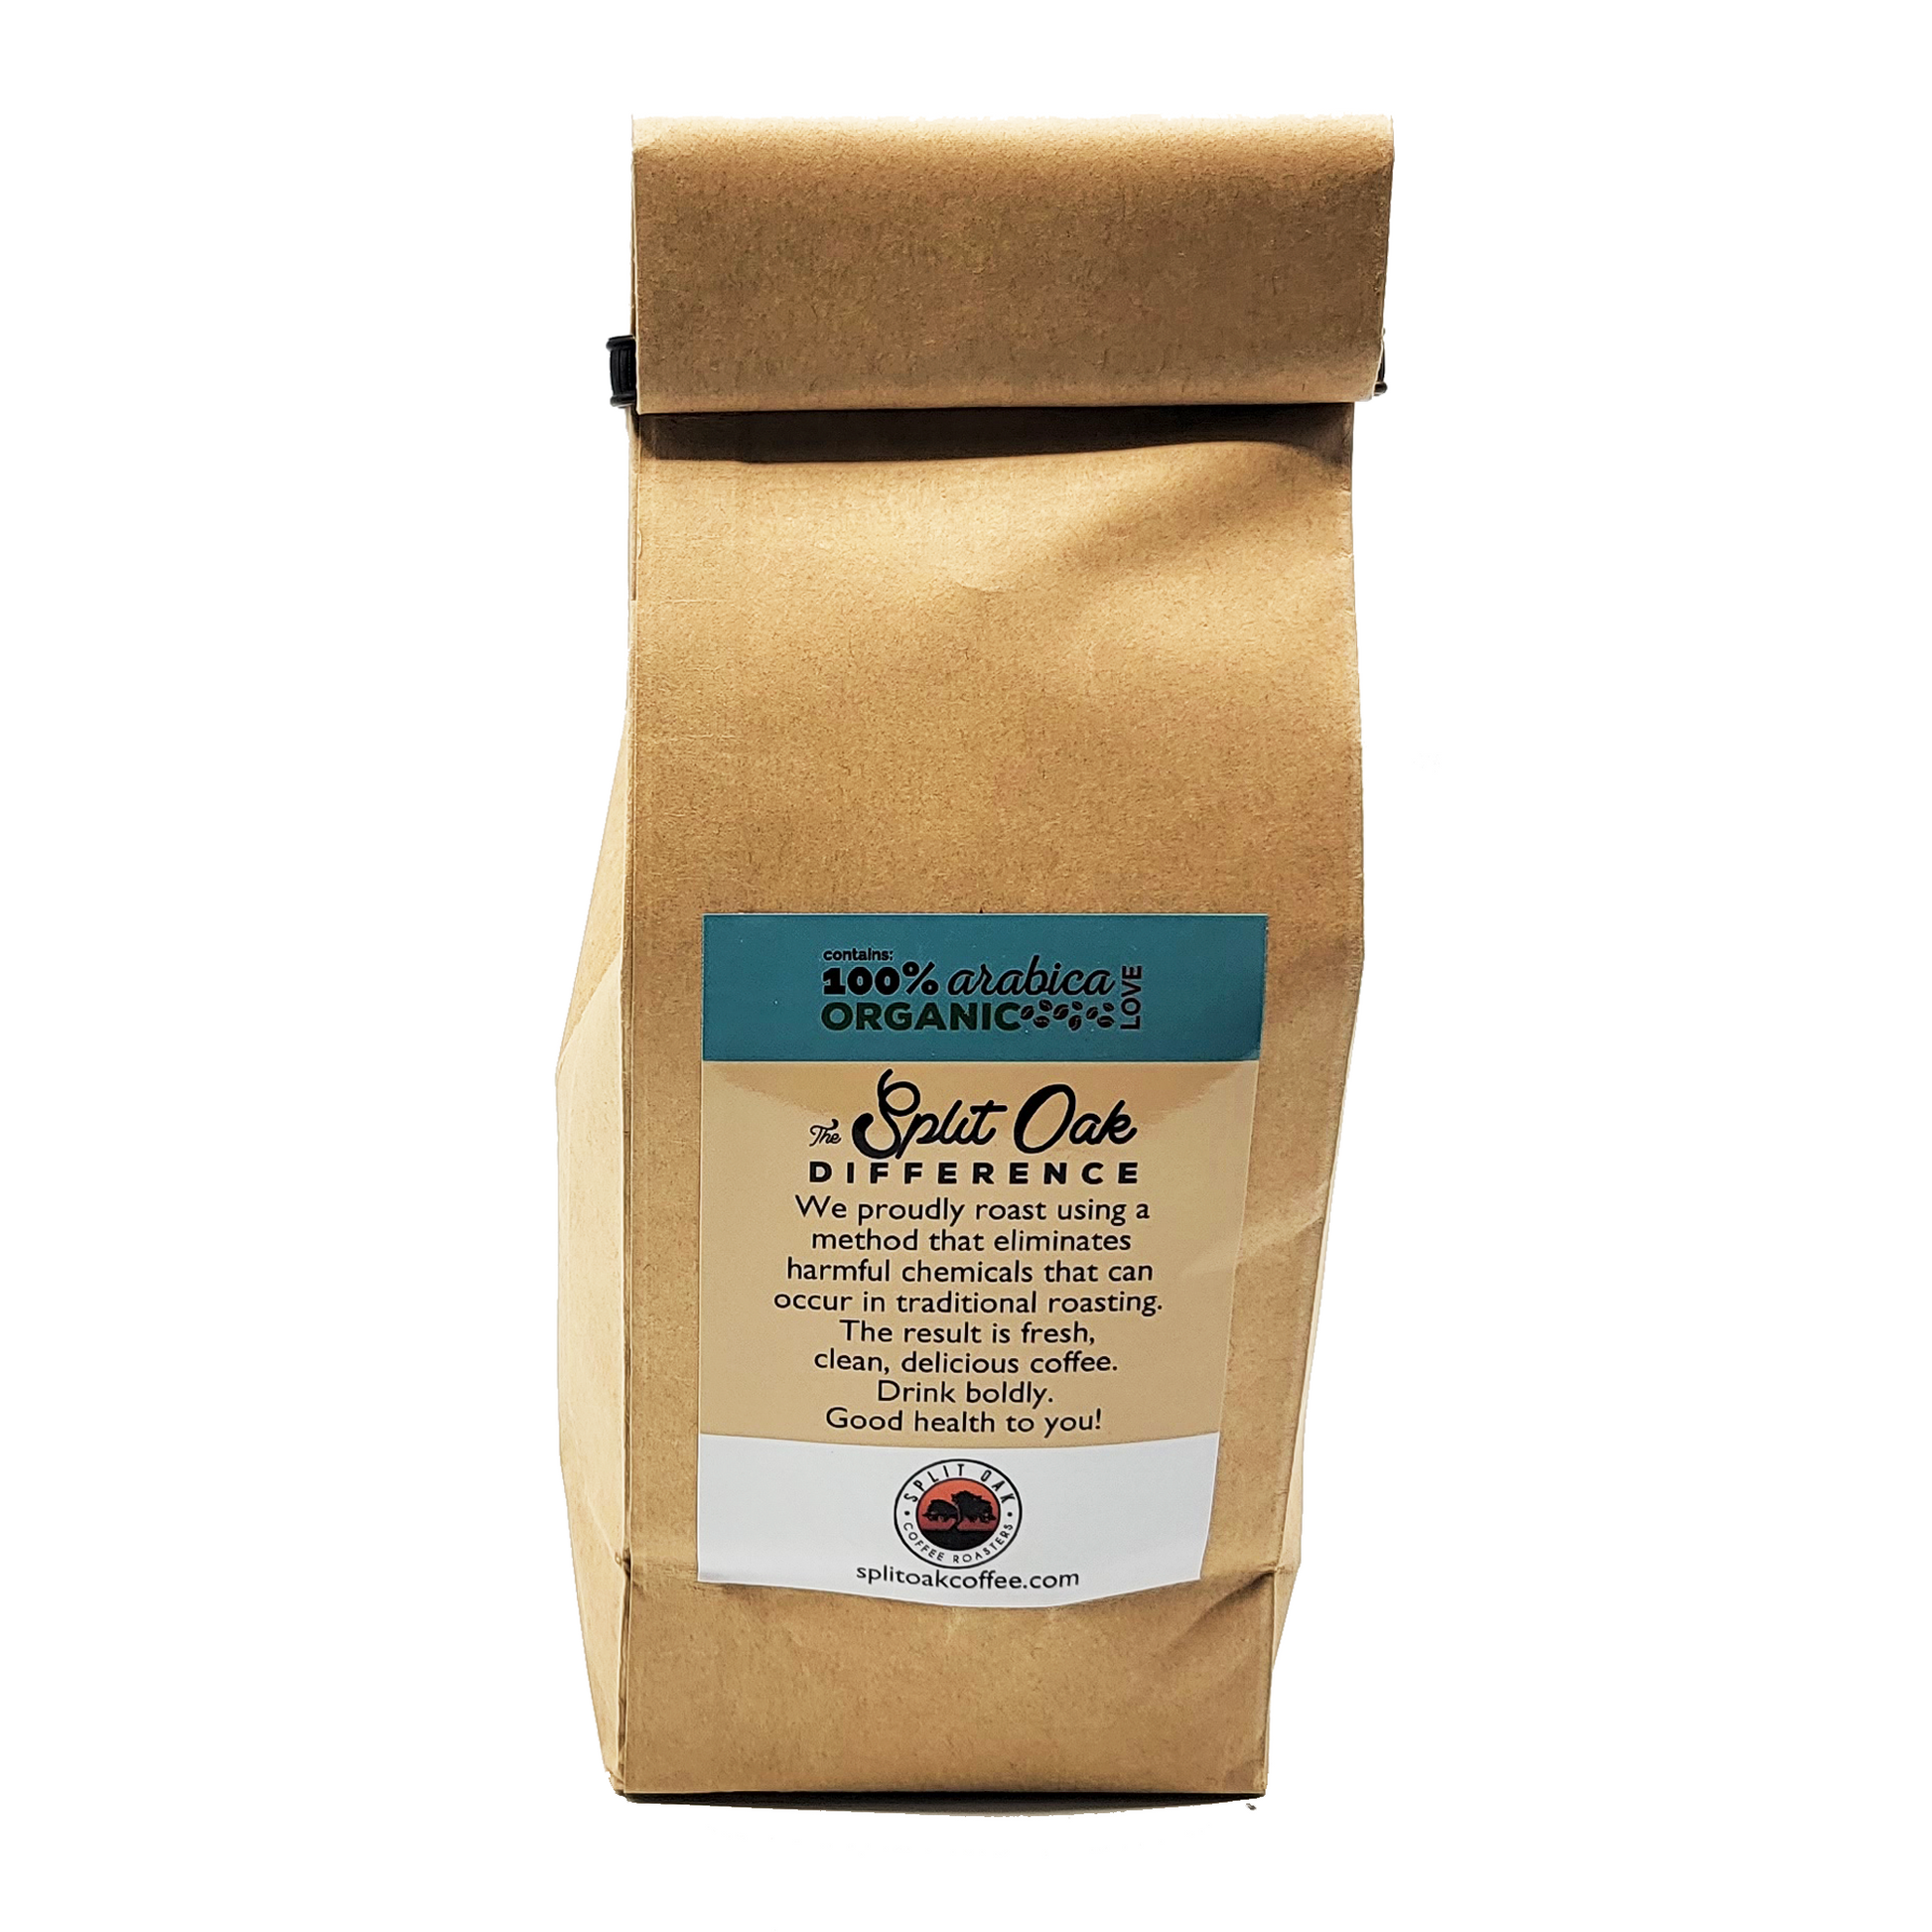 Medium Roast – Circles Coffee